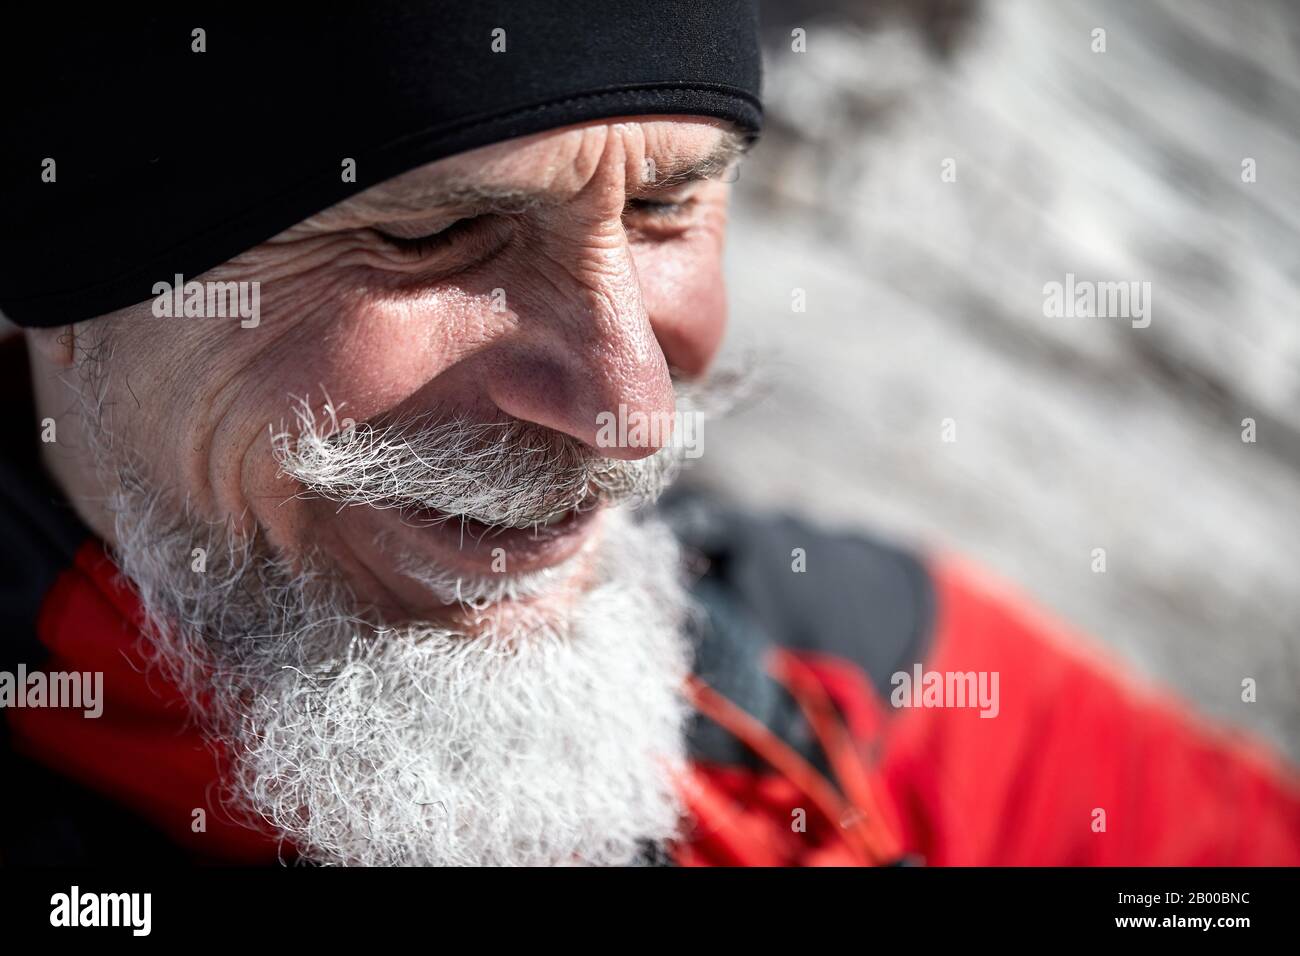 Portrait of elderly runner man with grey beard smiling against winter mountain background Stock Photo